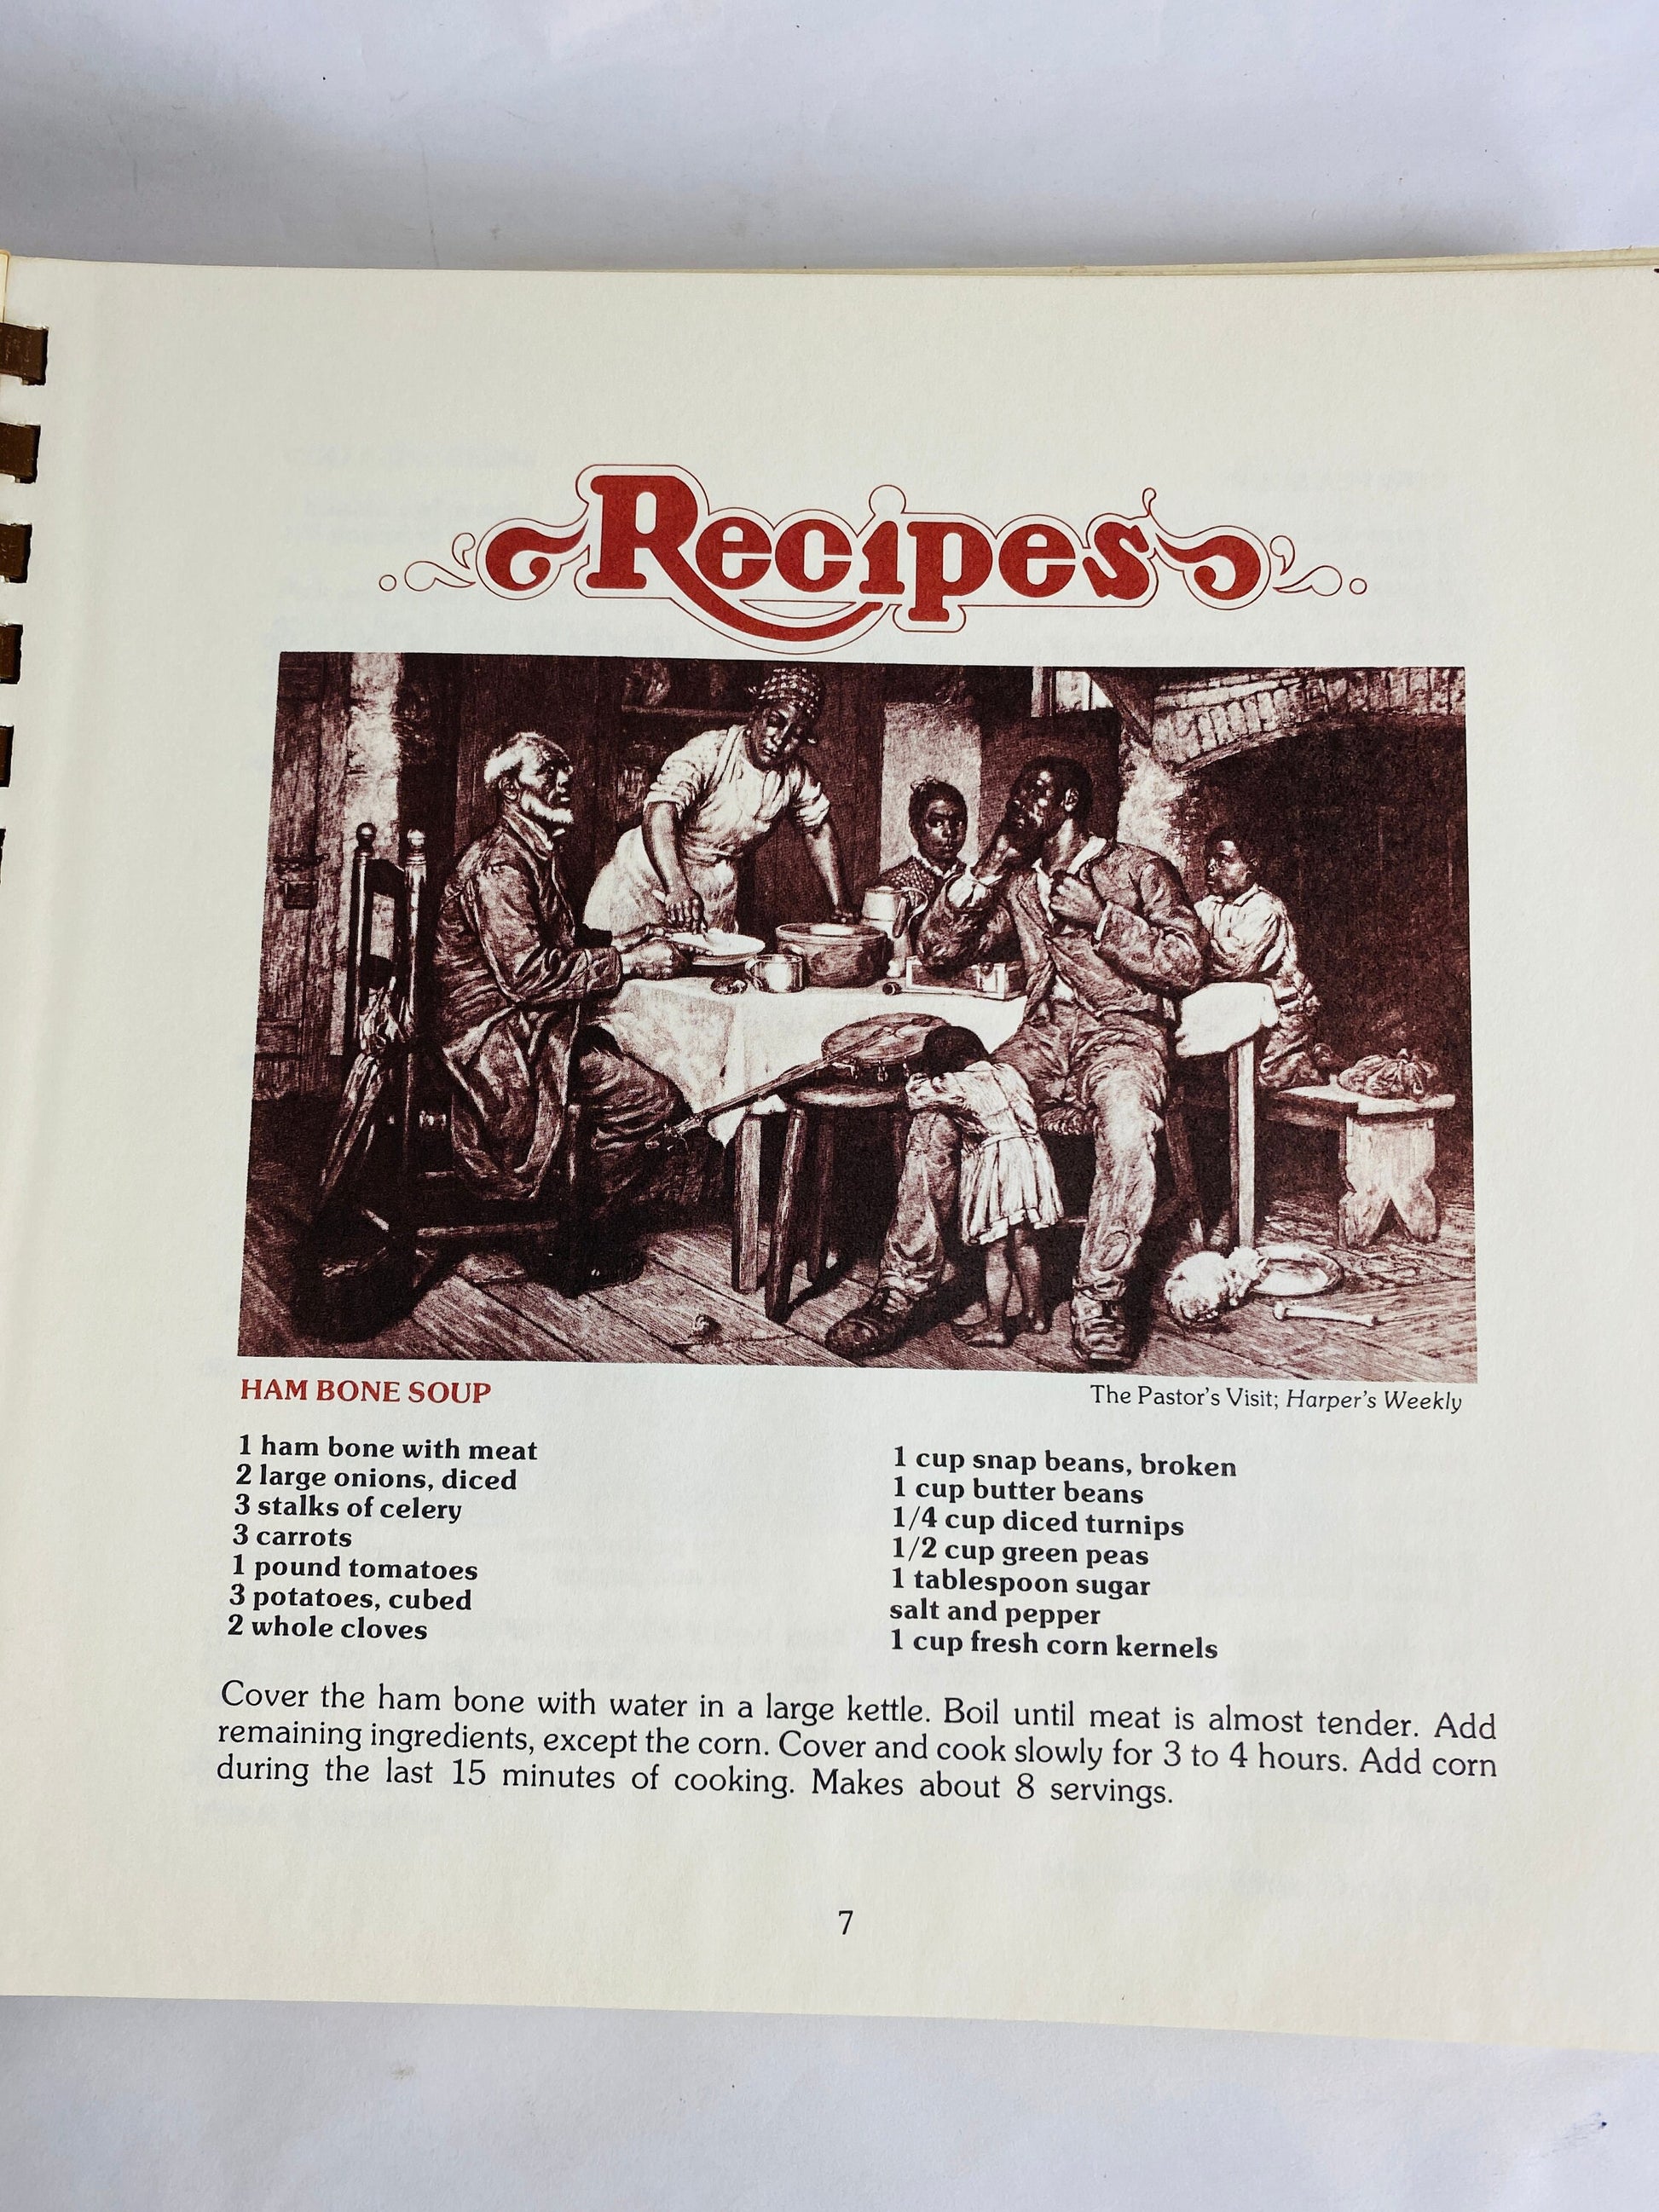 Melting Pot vintage Ethnic Cuisine in Texas cookbook circa 1977 University of Texas at San Antonio. Immigrant cultural recipes